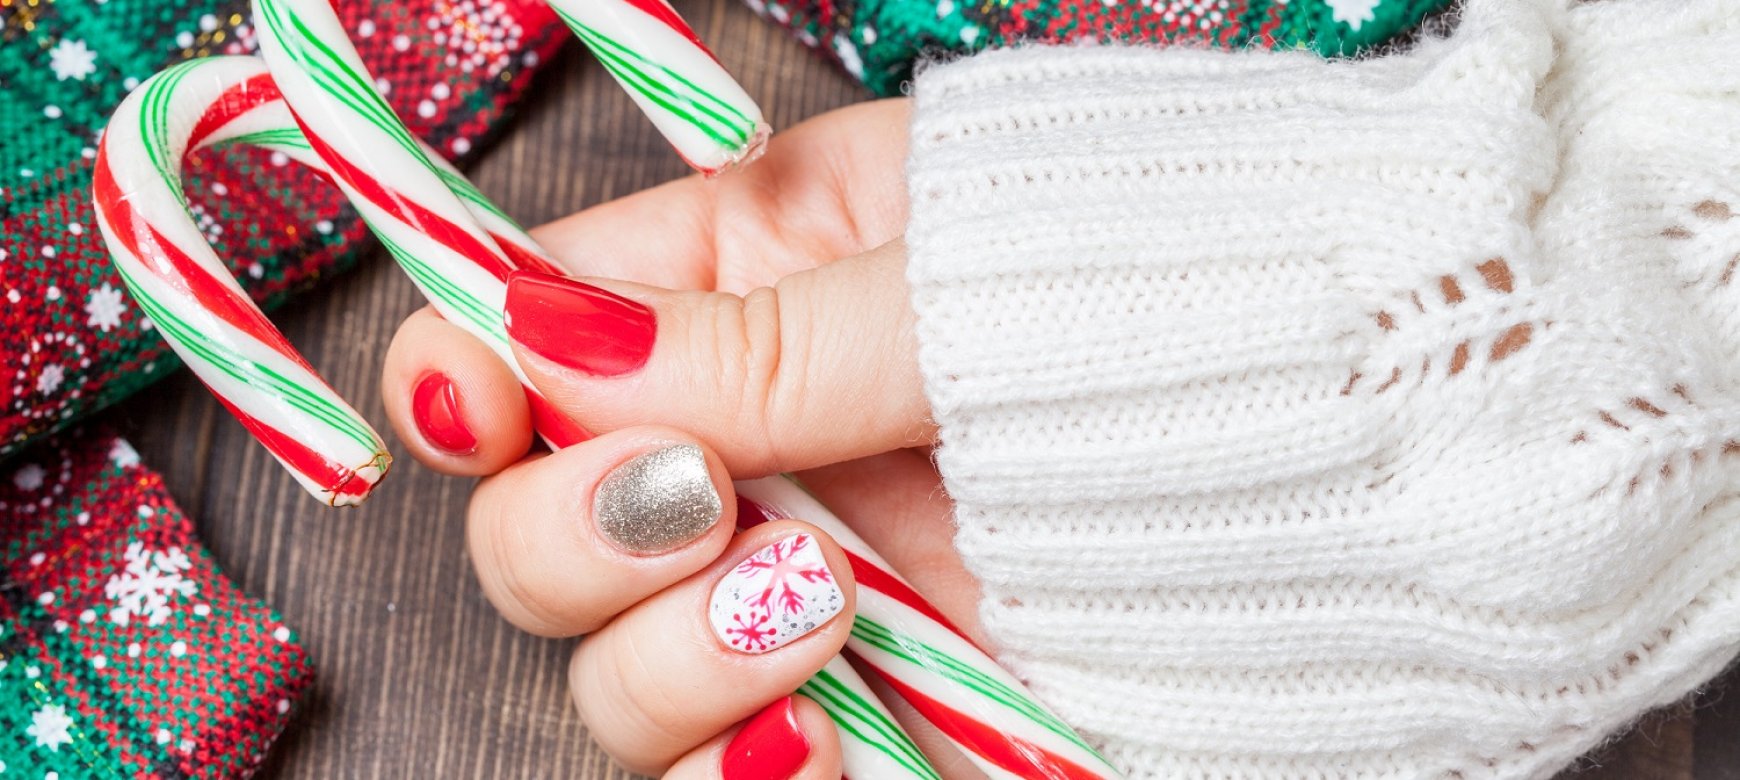 Christmas nails: Όλα τα σχέδια και χρώματα που πρέπει να επιλέξετε για να έχετε λαμπερά άκρα για τις γιορτές!